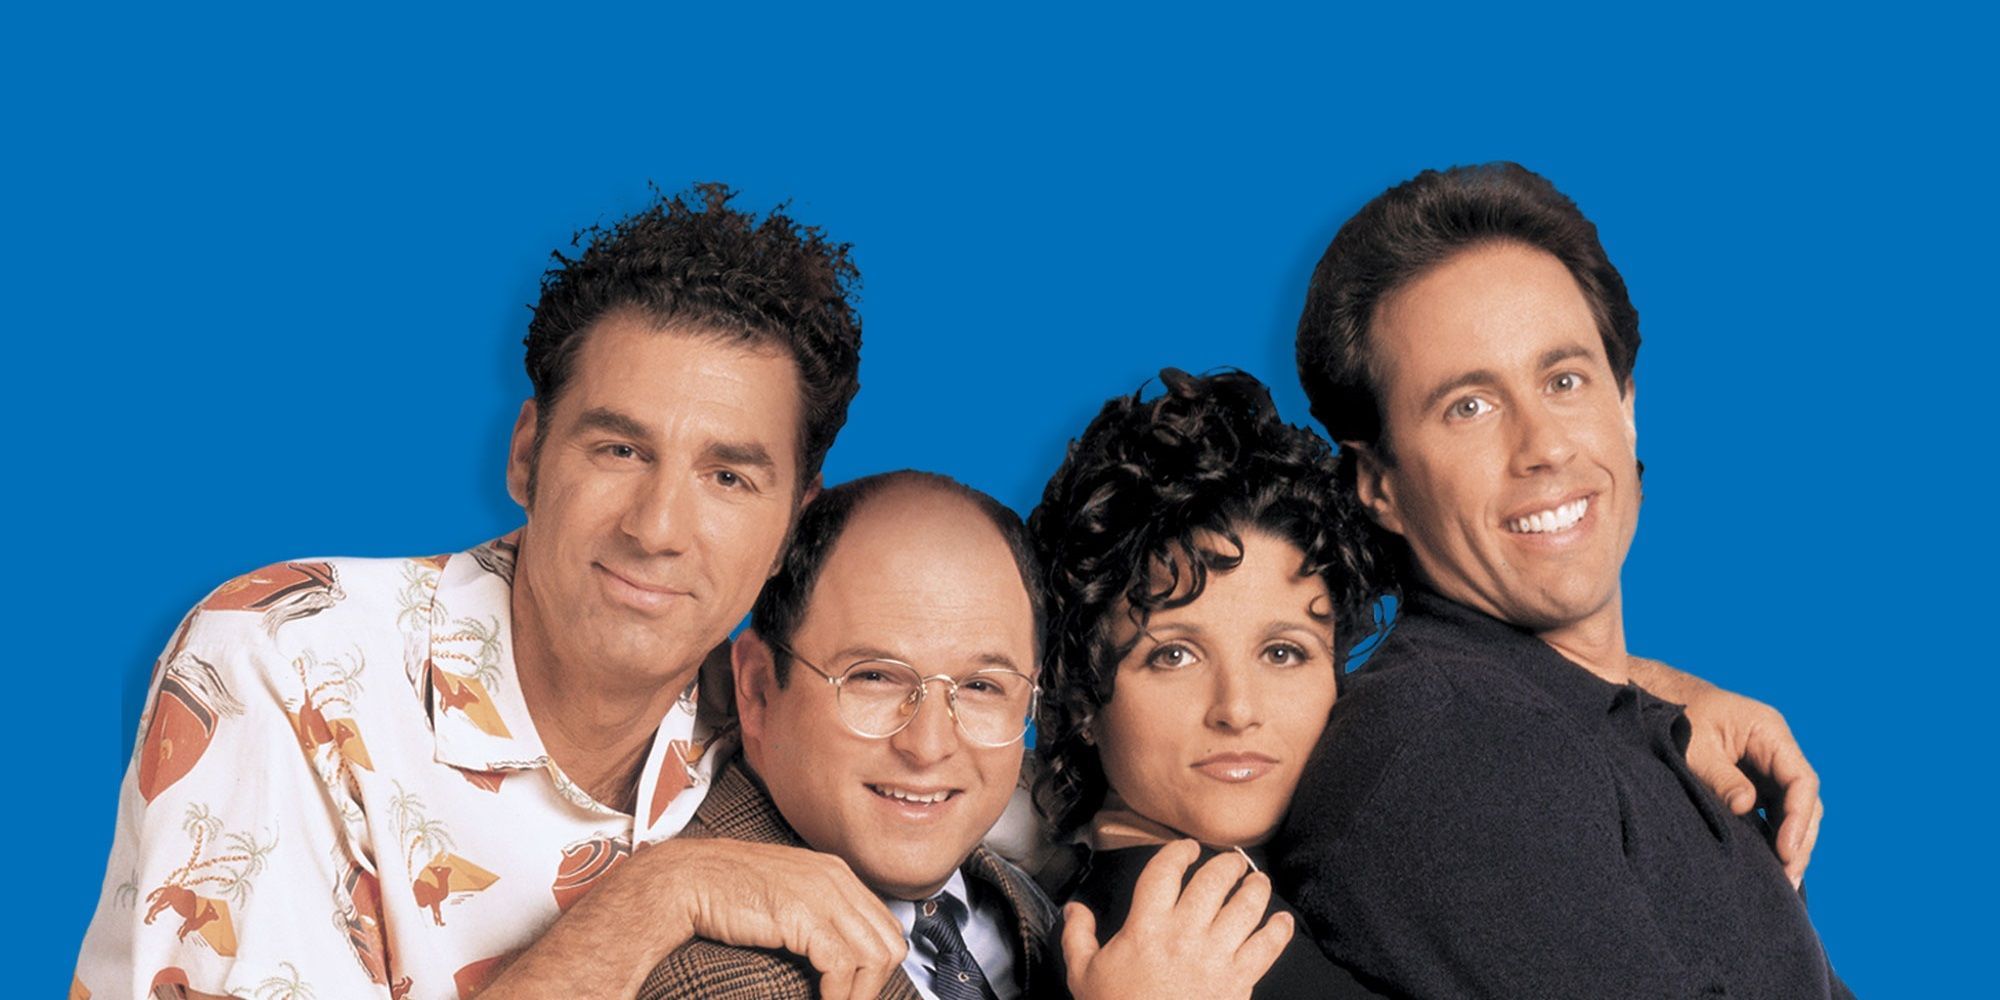 The cast of Seinfeld Michael Richards, Jason Alexander, Julia Louis-Dreyfus and Jerry Seinfeld